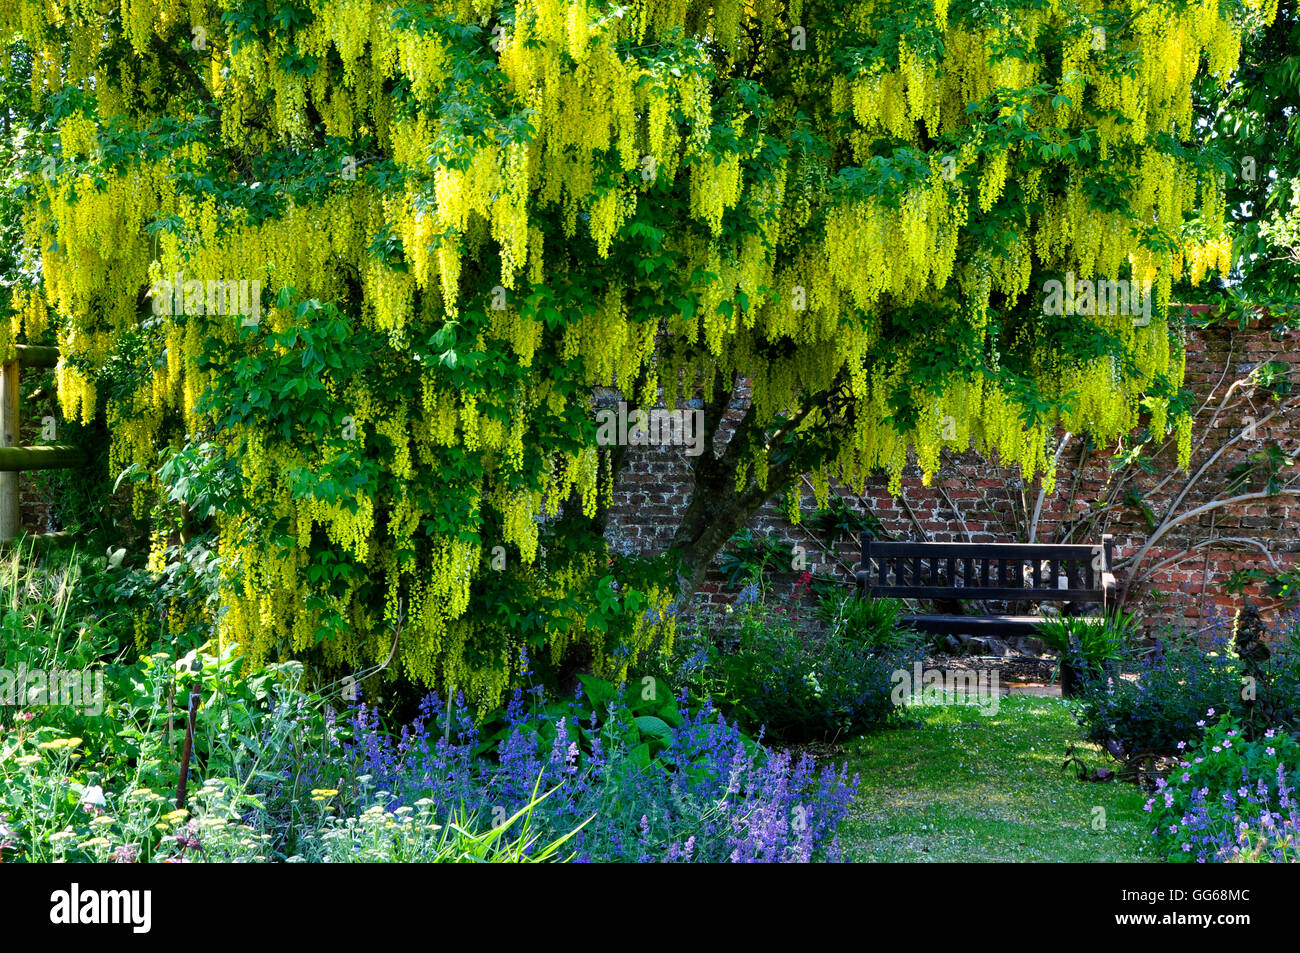 A flowering Laburnum tree in a garden UK Stock Photo